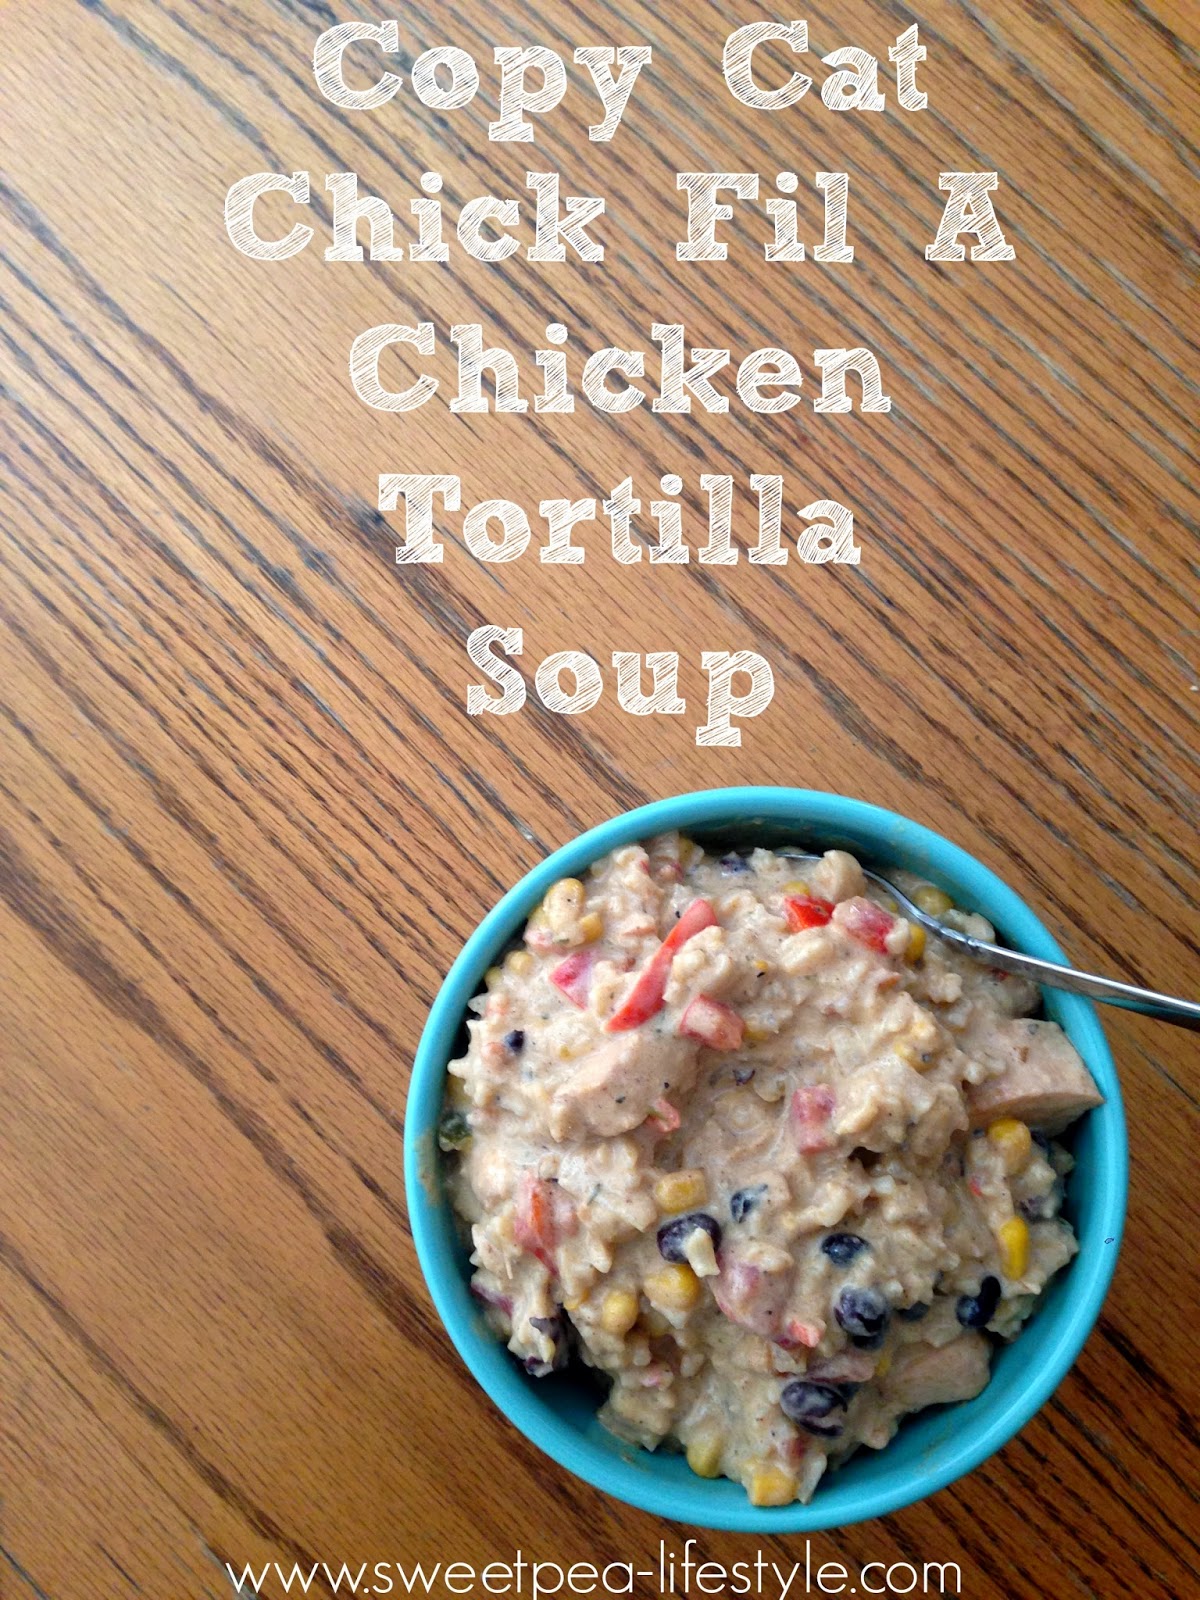 copy cat chicken tortilla soup from chick fil a is a winner dinner!